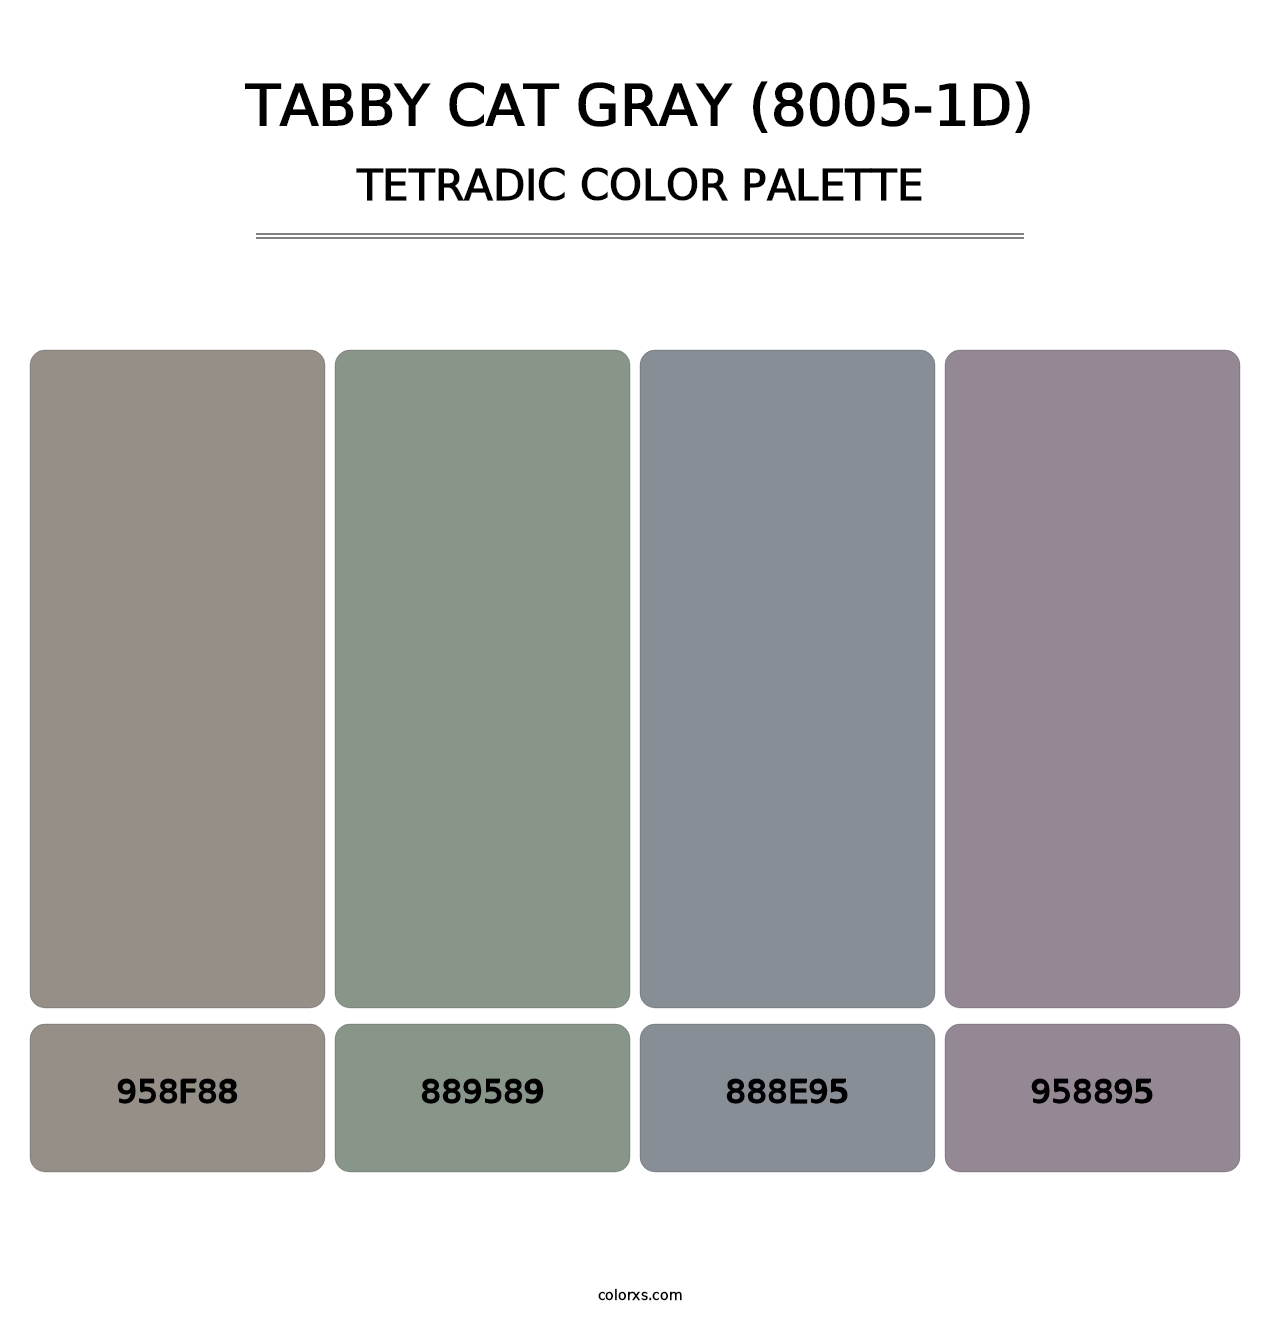 Tabby Cat Gray (8005-1D) - Tetradic Color Palette